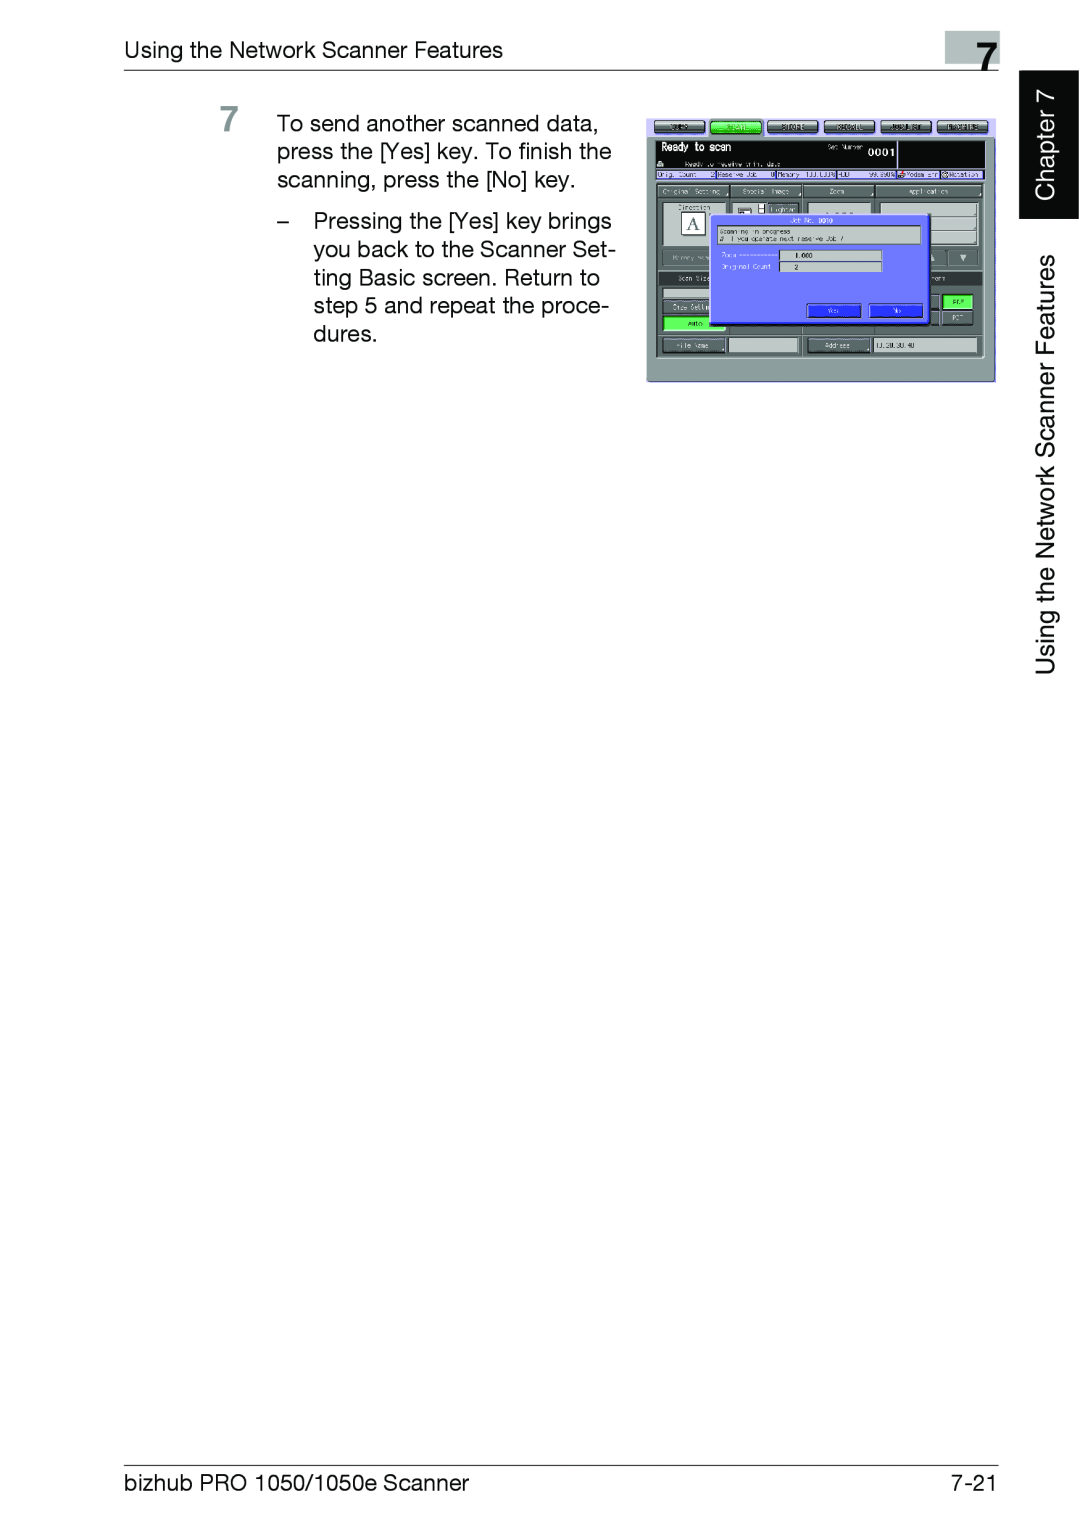 Konica Minolta 1050E appendix Chapter, Using the Network Scanner Features, bizhub PRO 1050/1050e Scanner, 7-21 